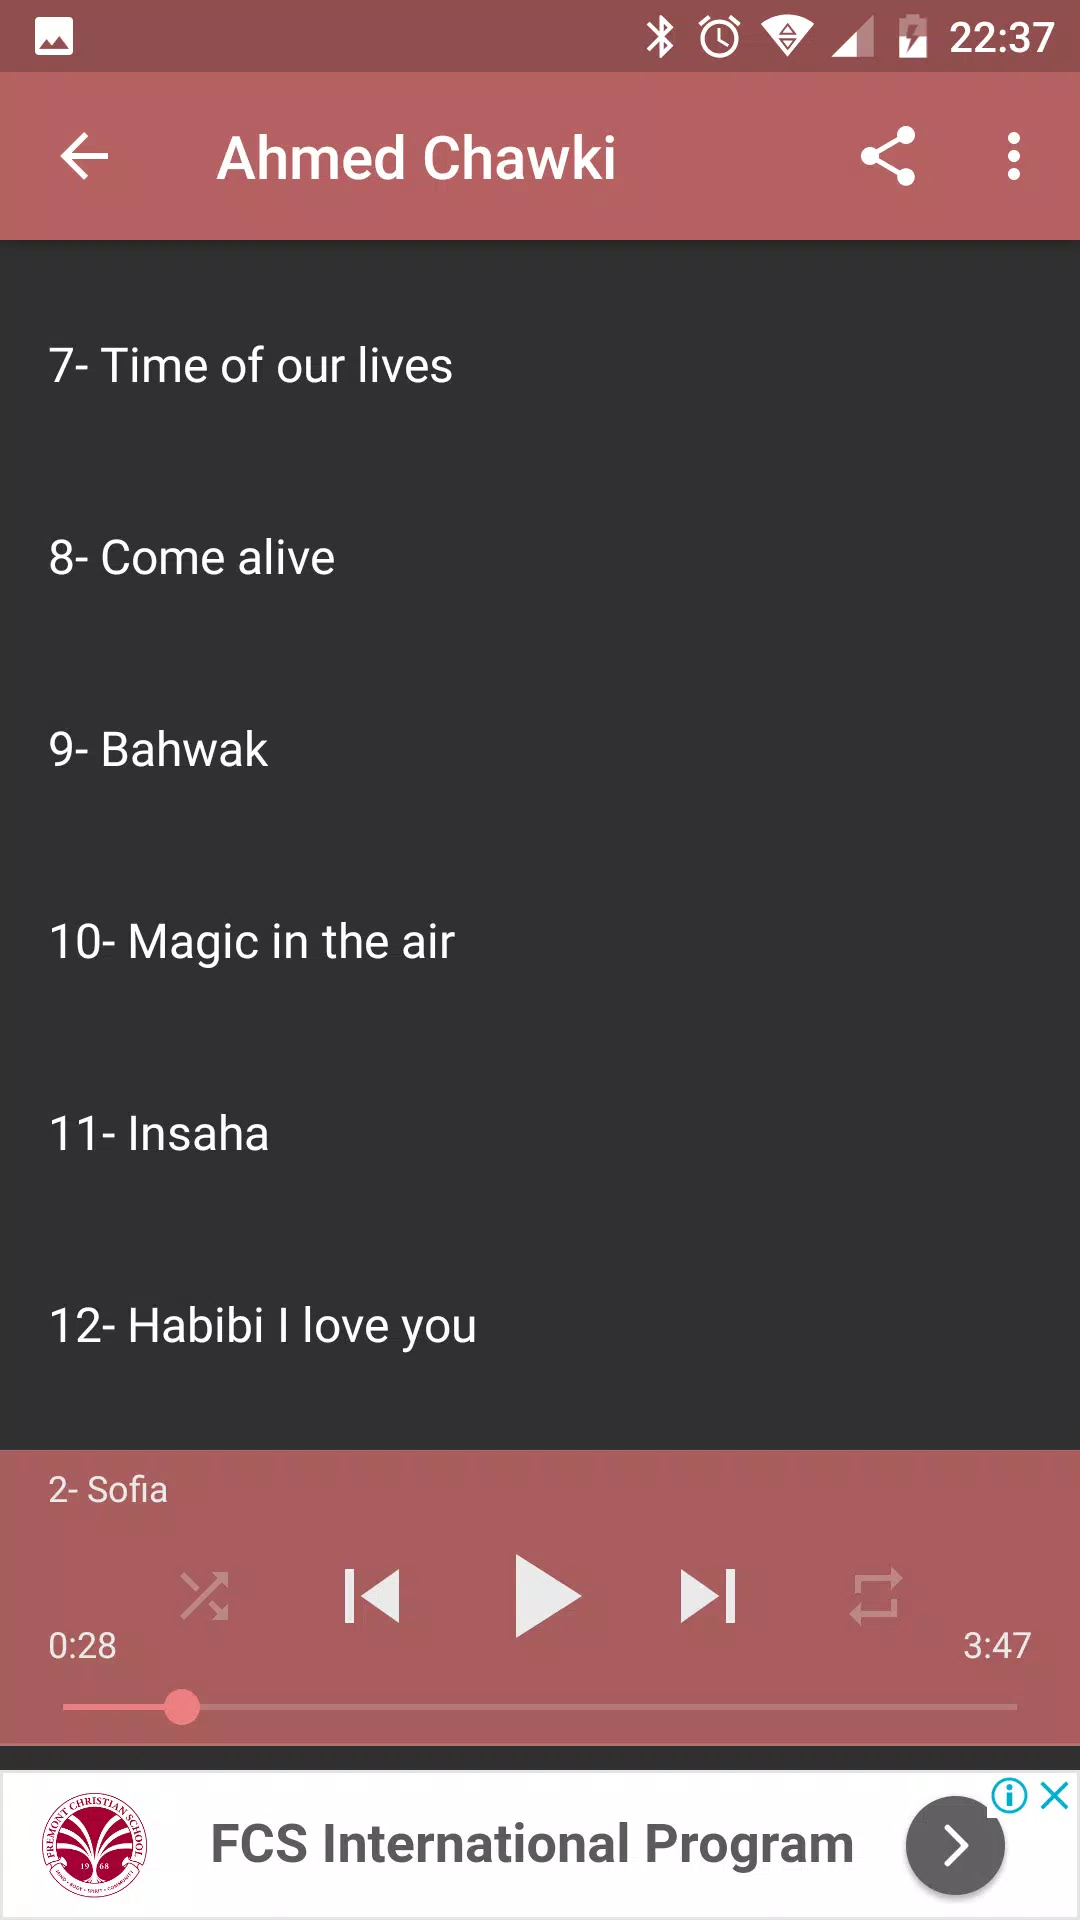 جديد أغاني أحمد شوقي Ahmed Chawki mp3 APK for Android Download